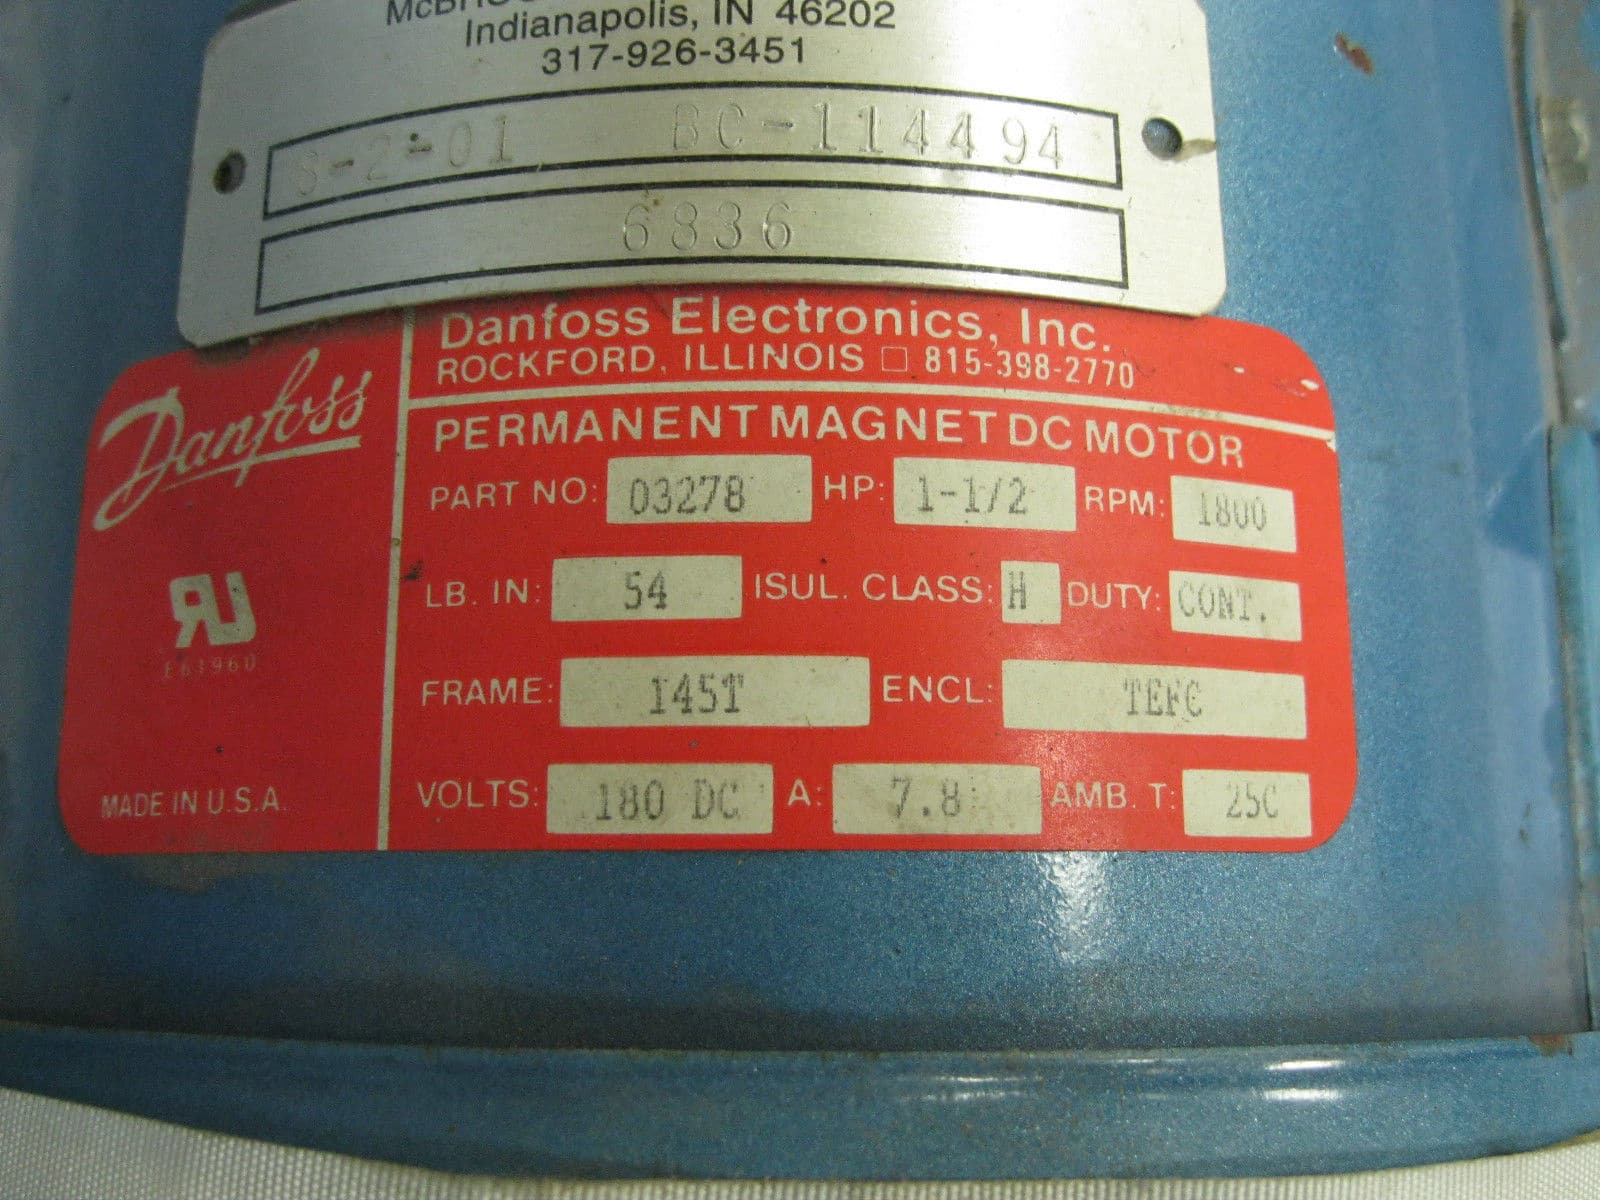 DANFOSS 03278 1 1/2 HP PERMANENT MAGNET DC 2 yr warranty – Integrity Electric Direct